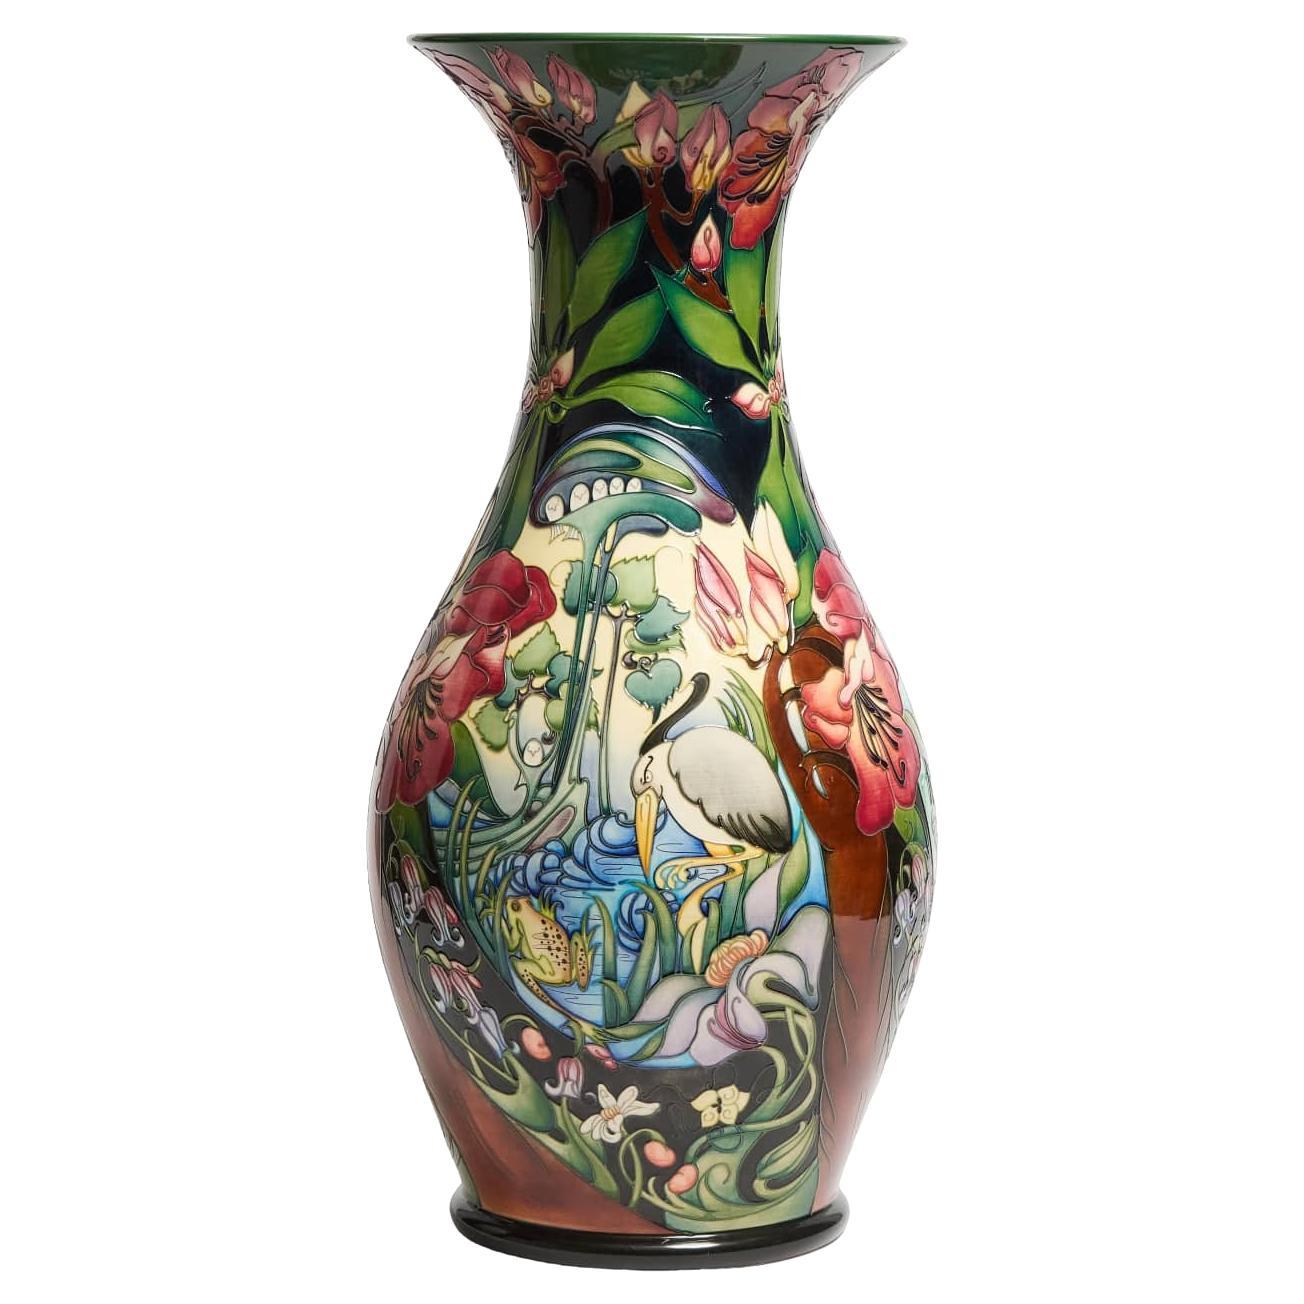 MOORCROFT "HIDDEN DREAMS" large vase designed by Emma Bossons 26/50 dated 2005 For Sale